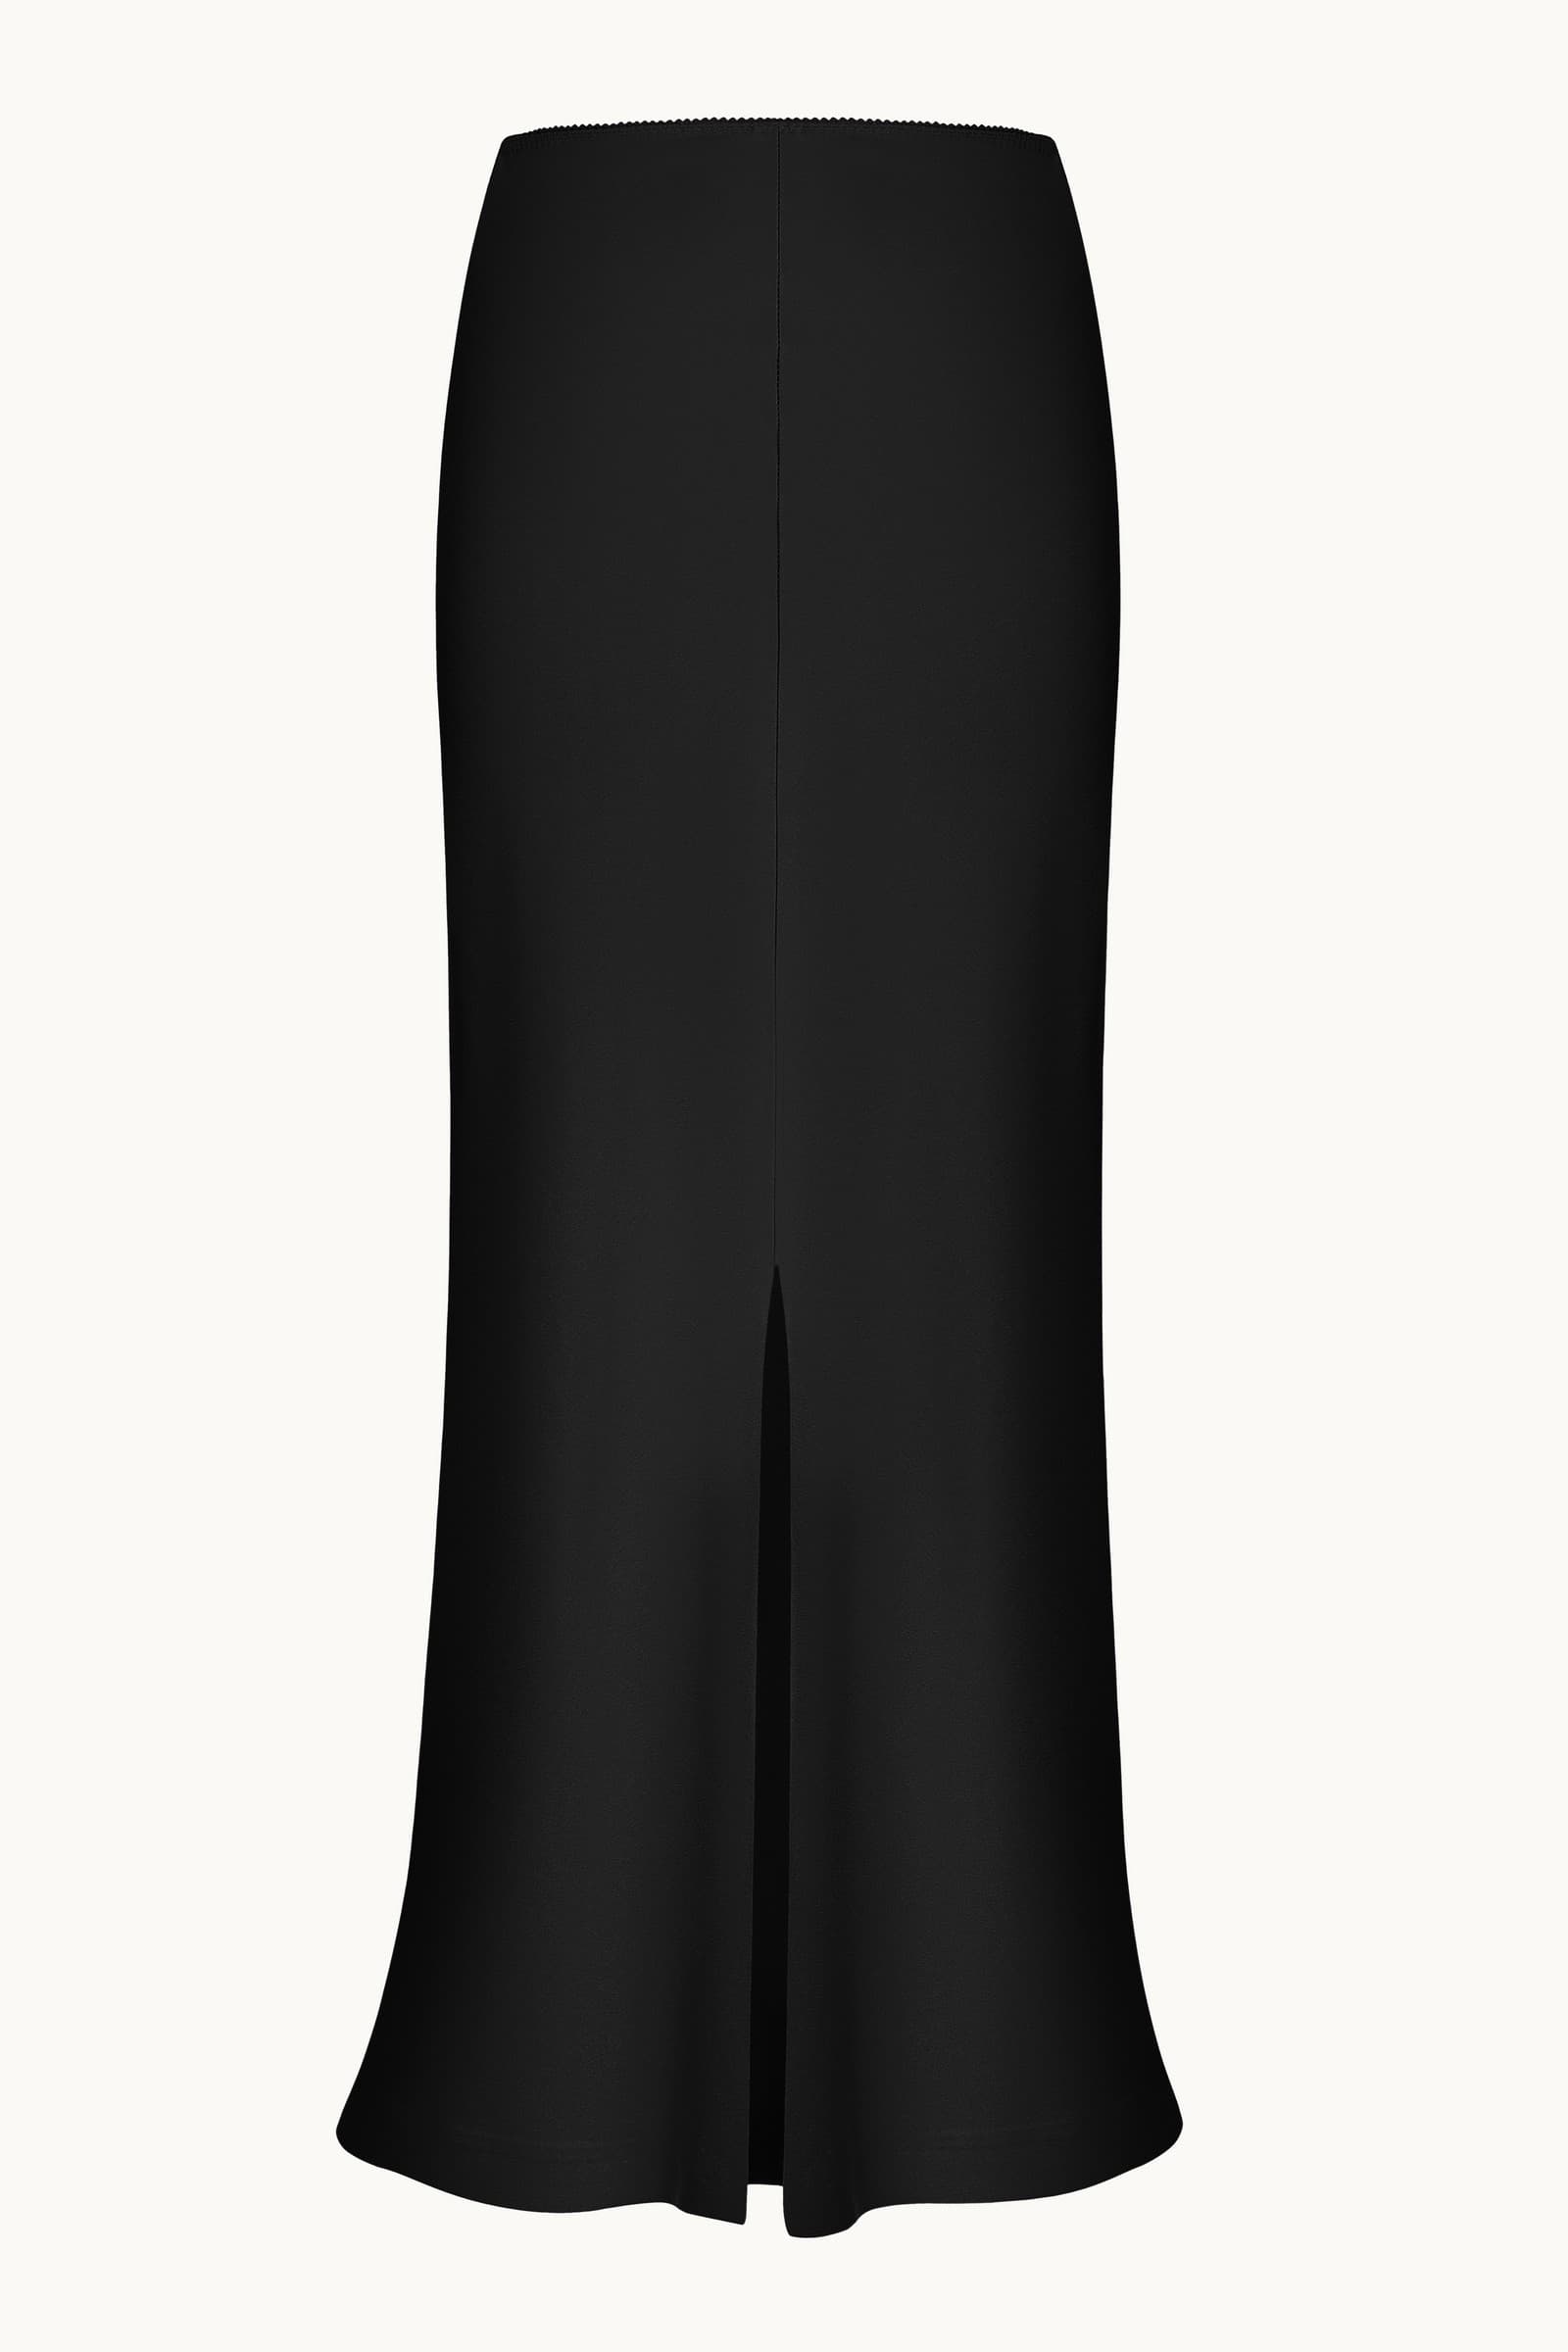 Rowena skirt